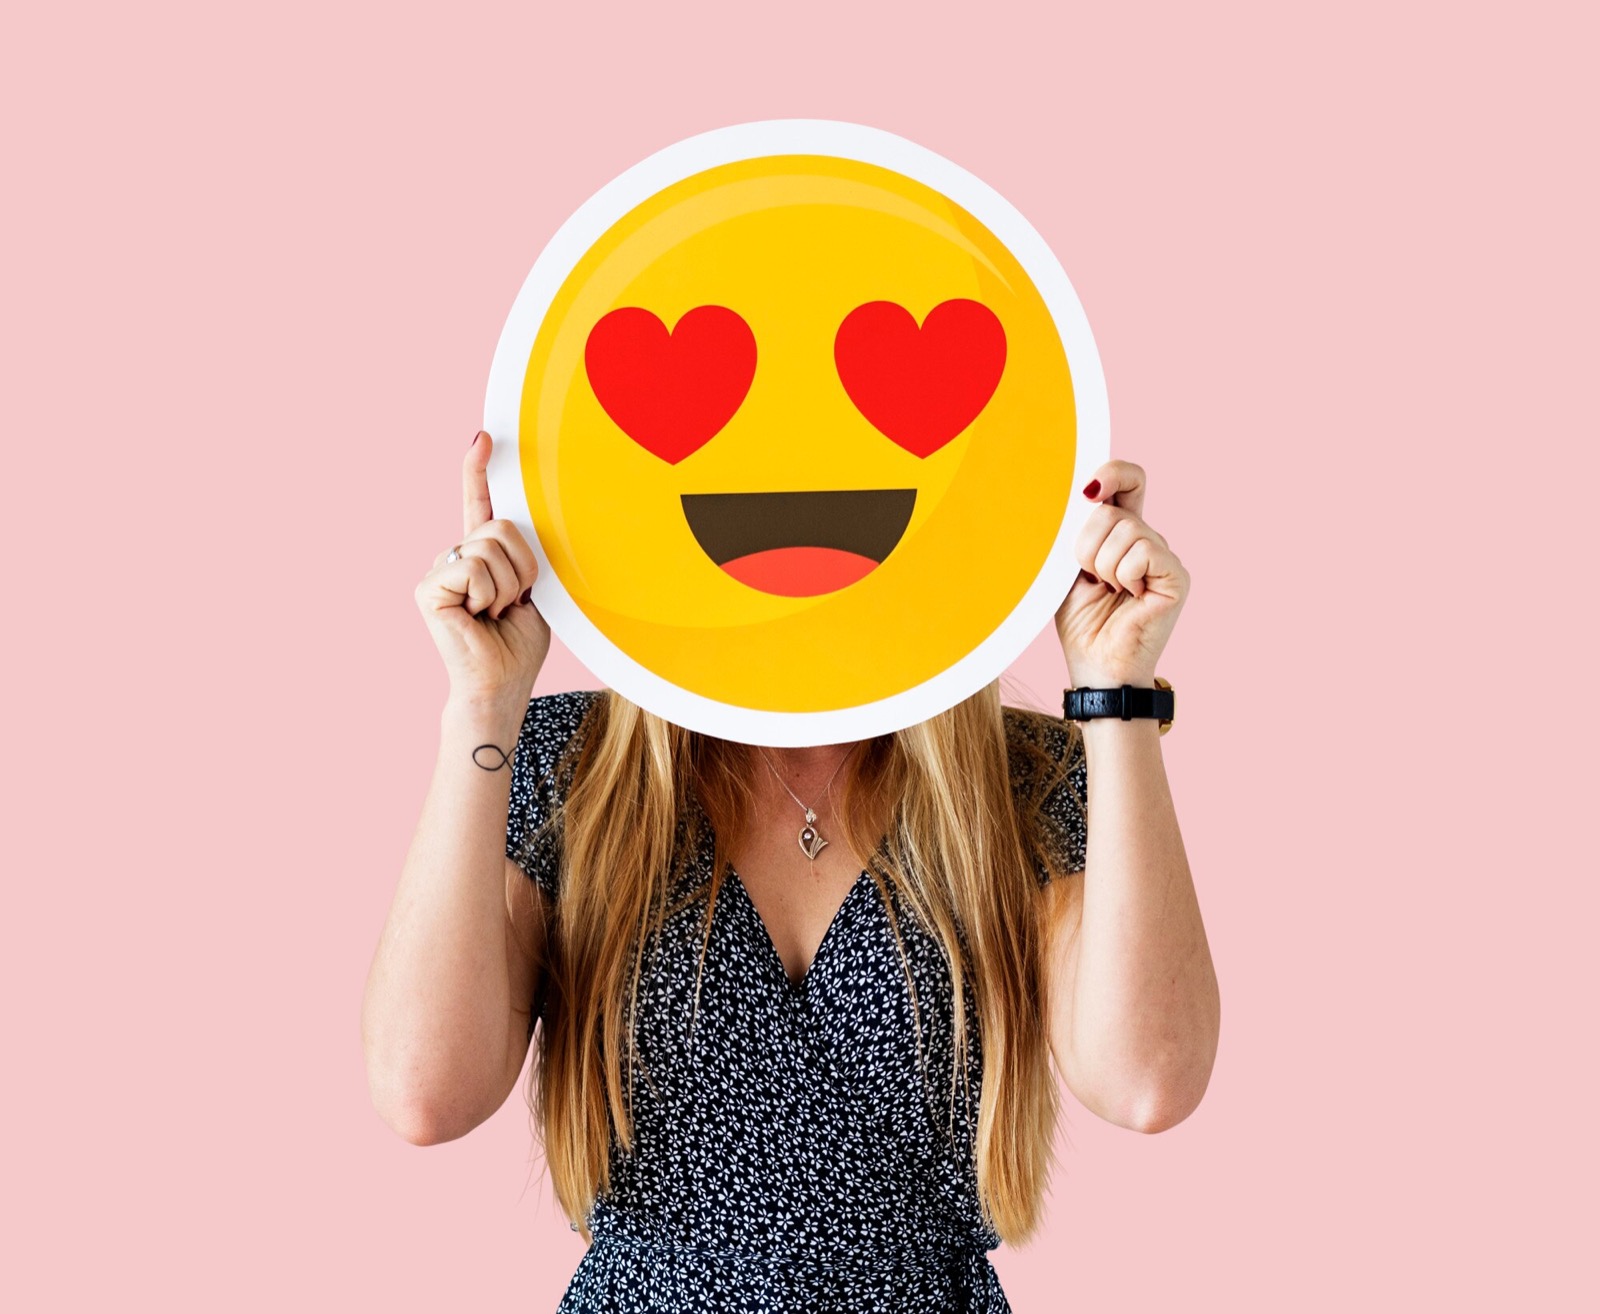 What Valentine Are You? Romantic lovesick emoji